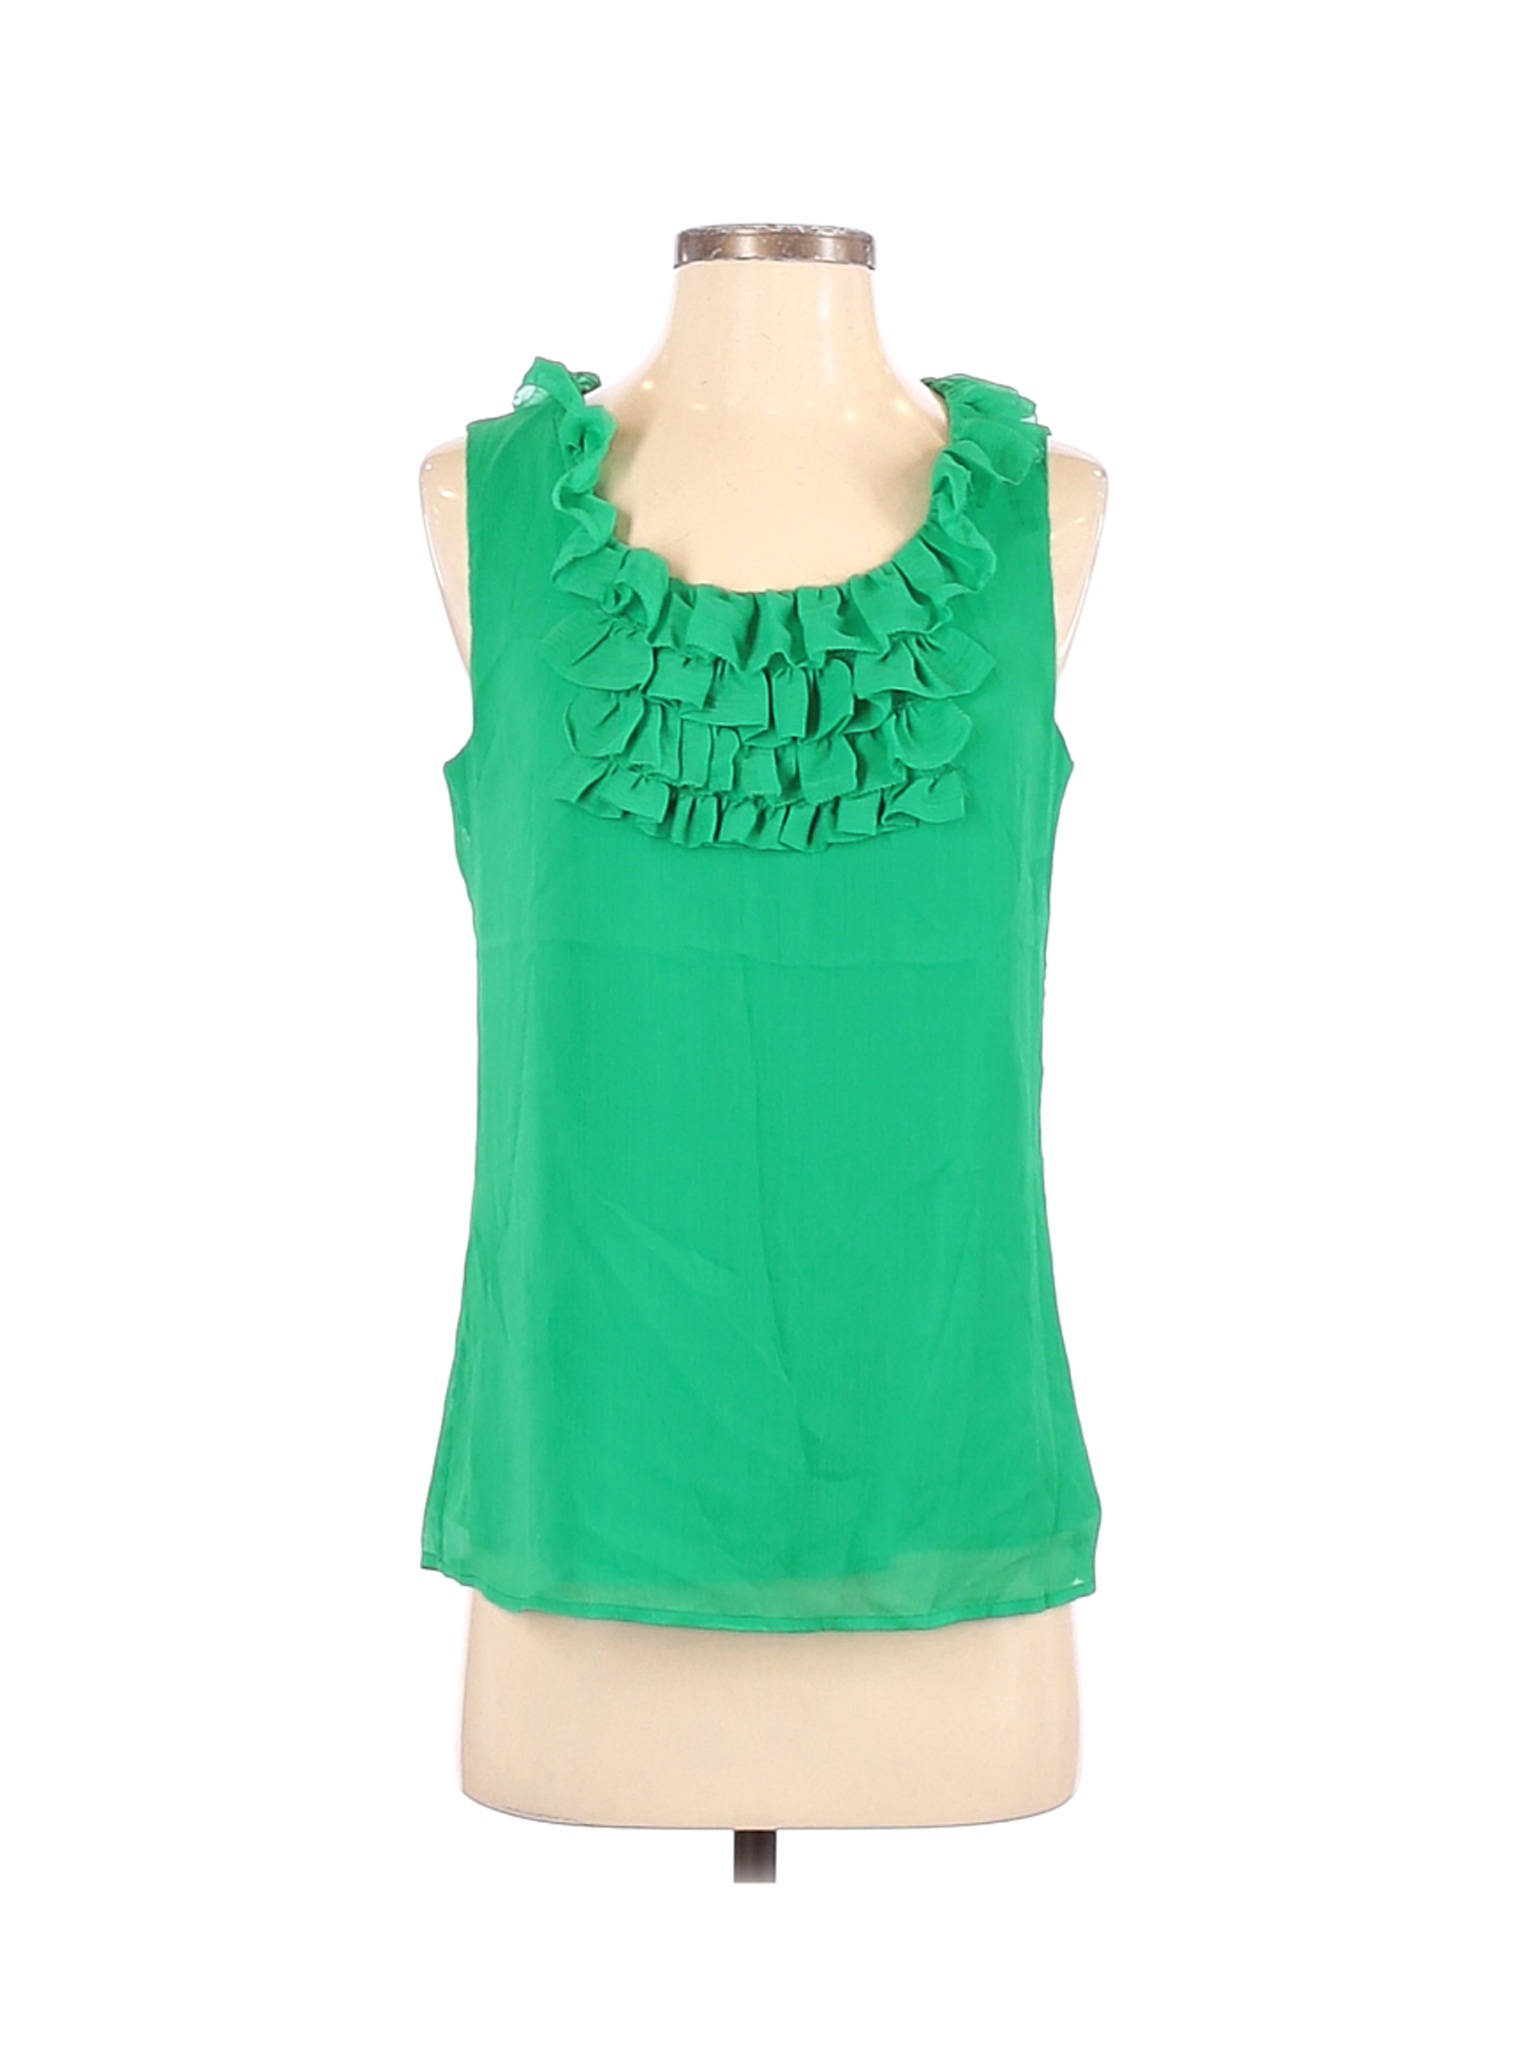 Basque Women Green Sleeveless Blouse 8 | eBay